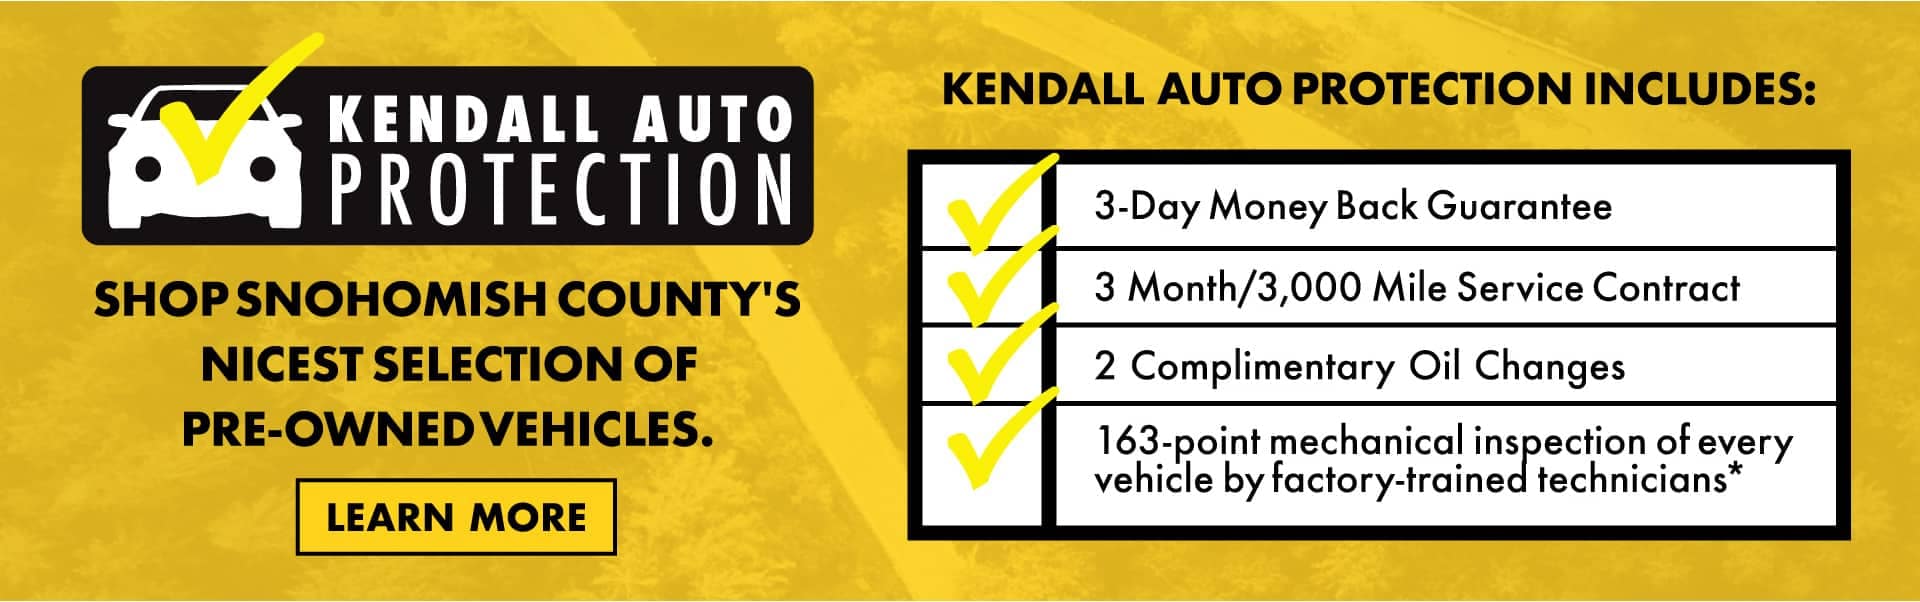 Kendall Auto Protection Desktop Slide